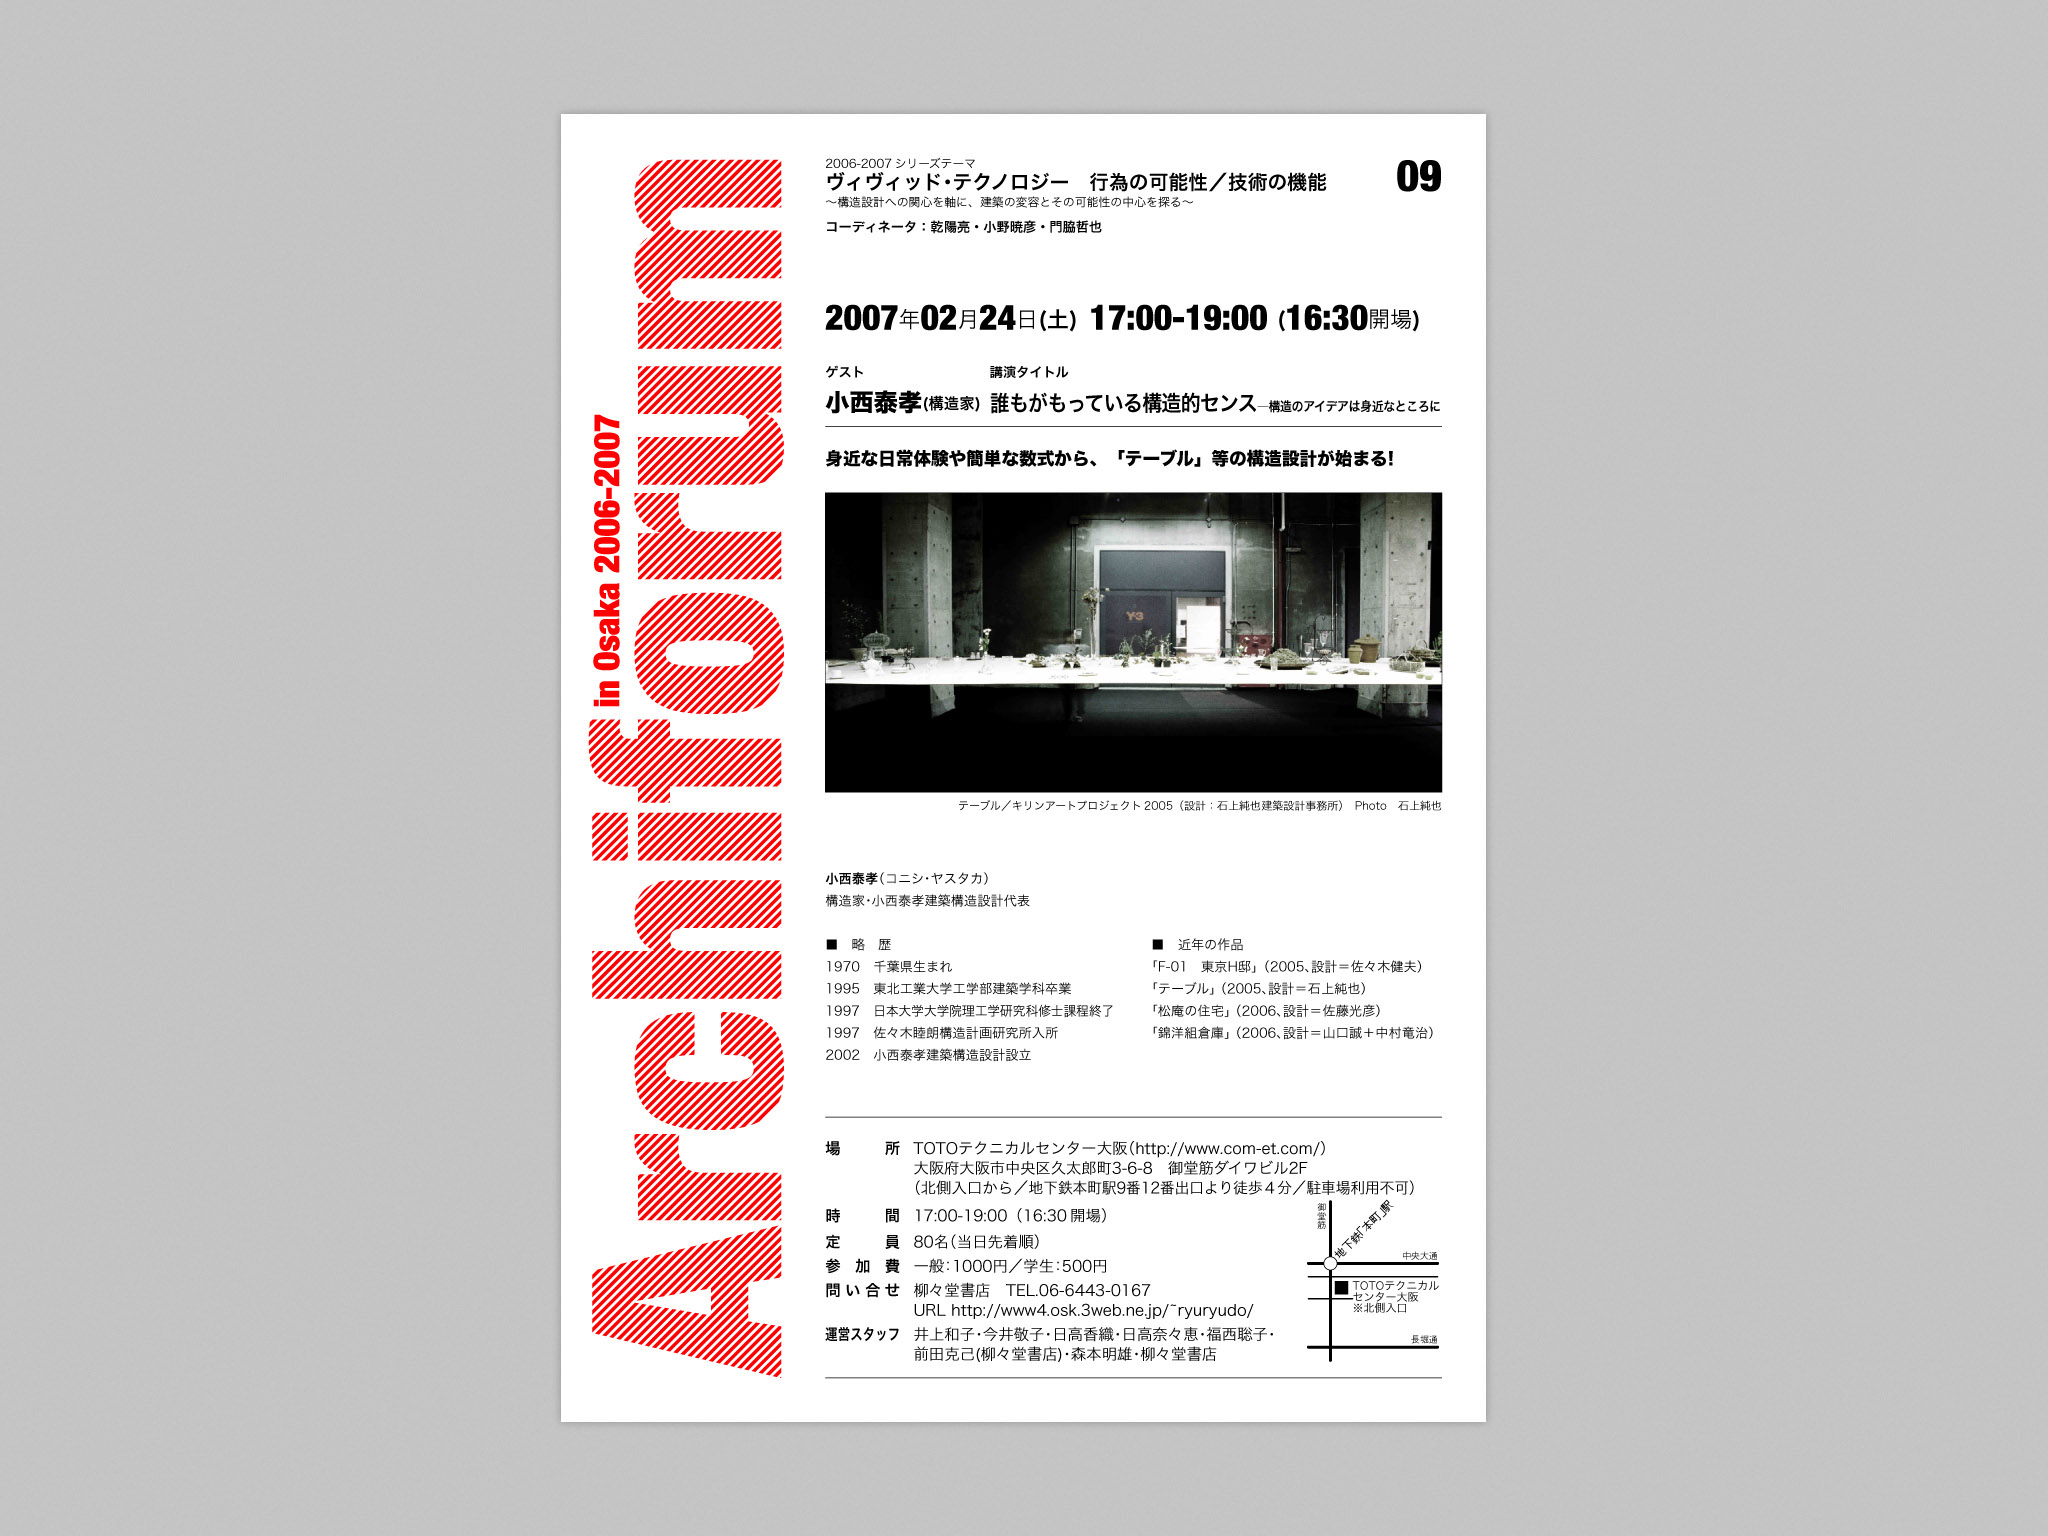 Archiforum in OSAKA 2006-2007